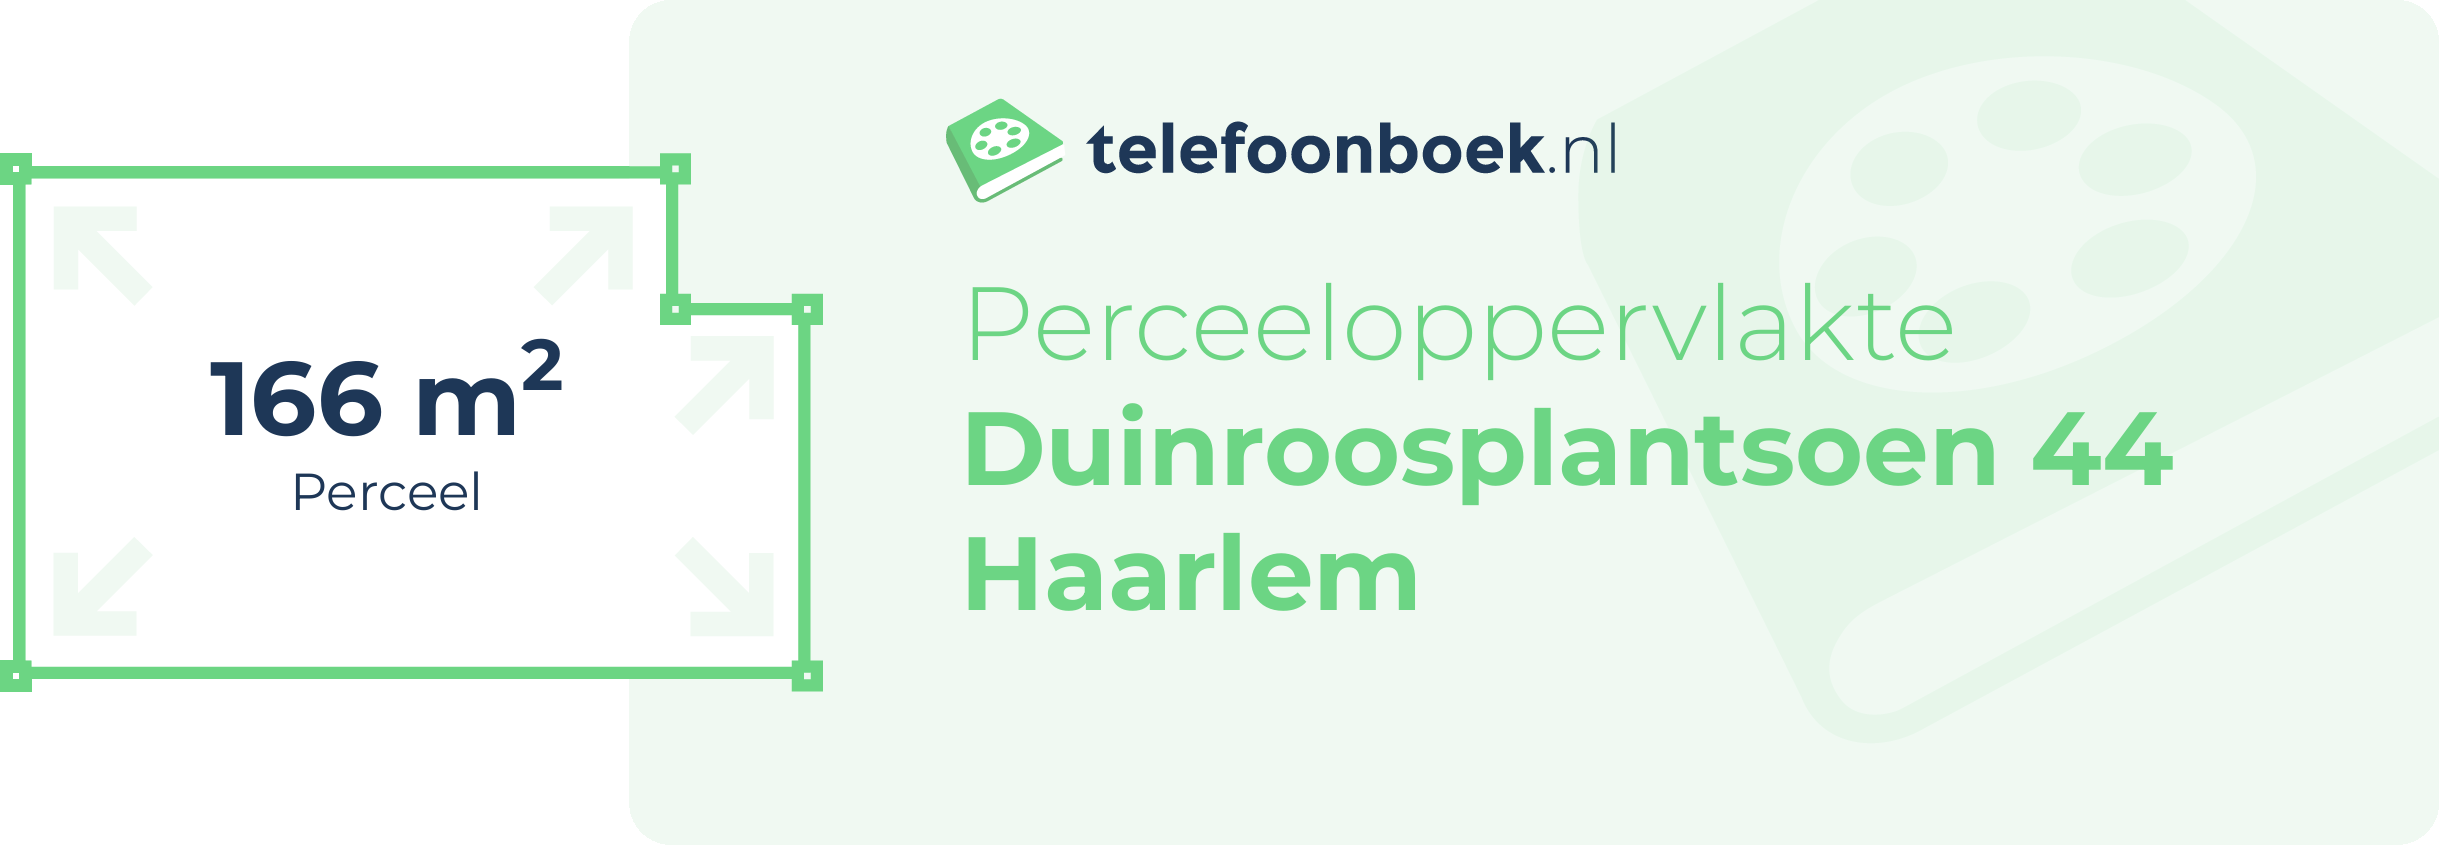 Perceeloppervlakte Duinroosplantsoen 44 Haarlem